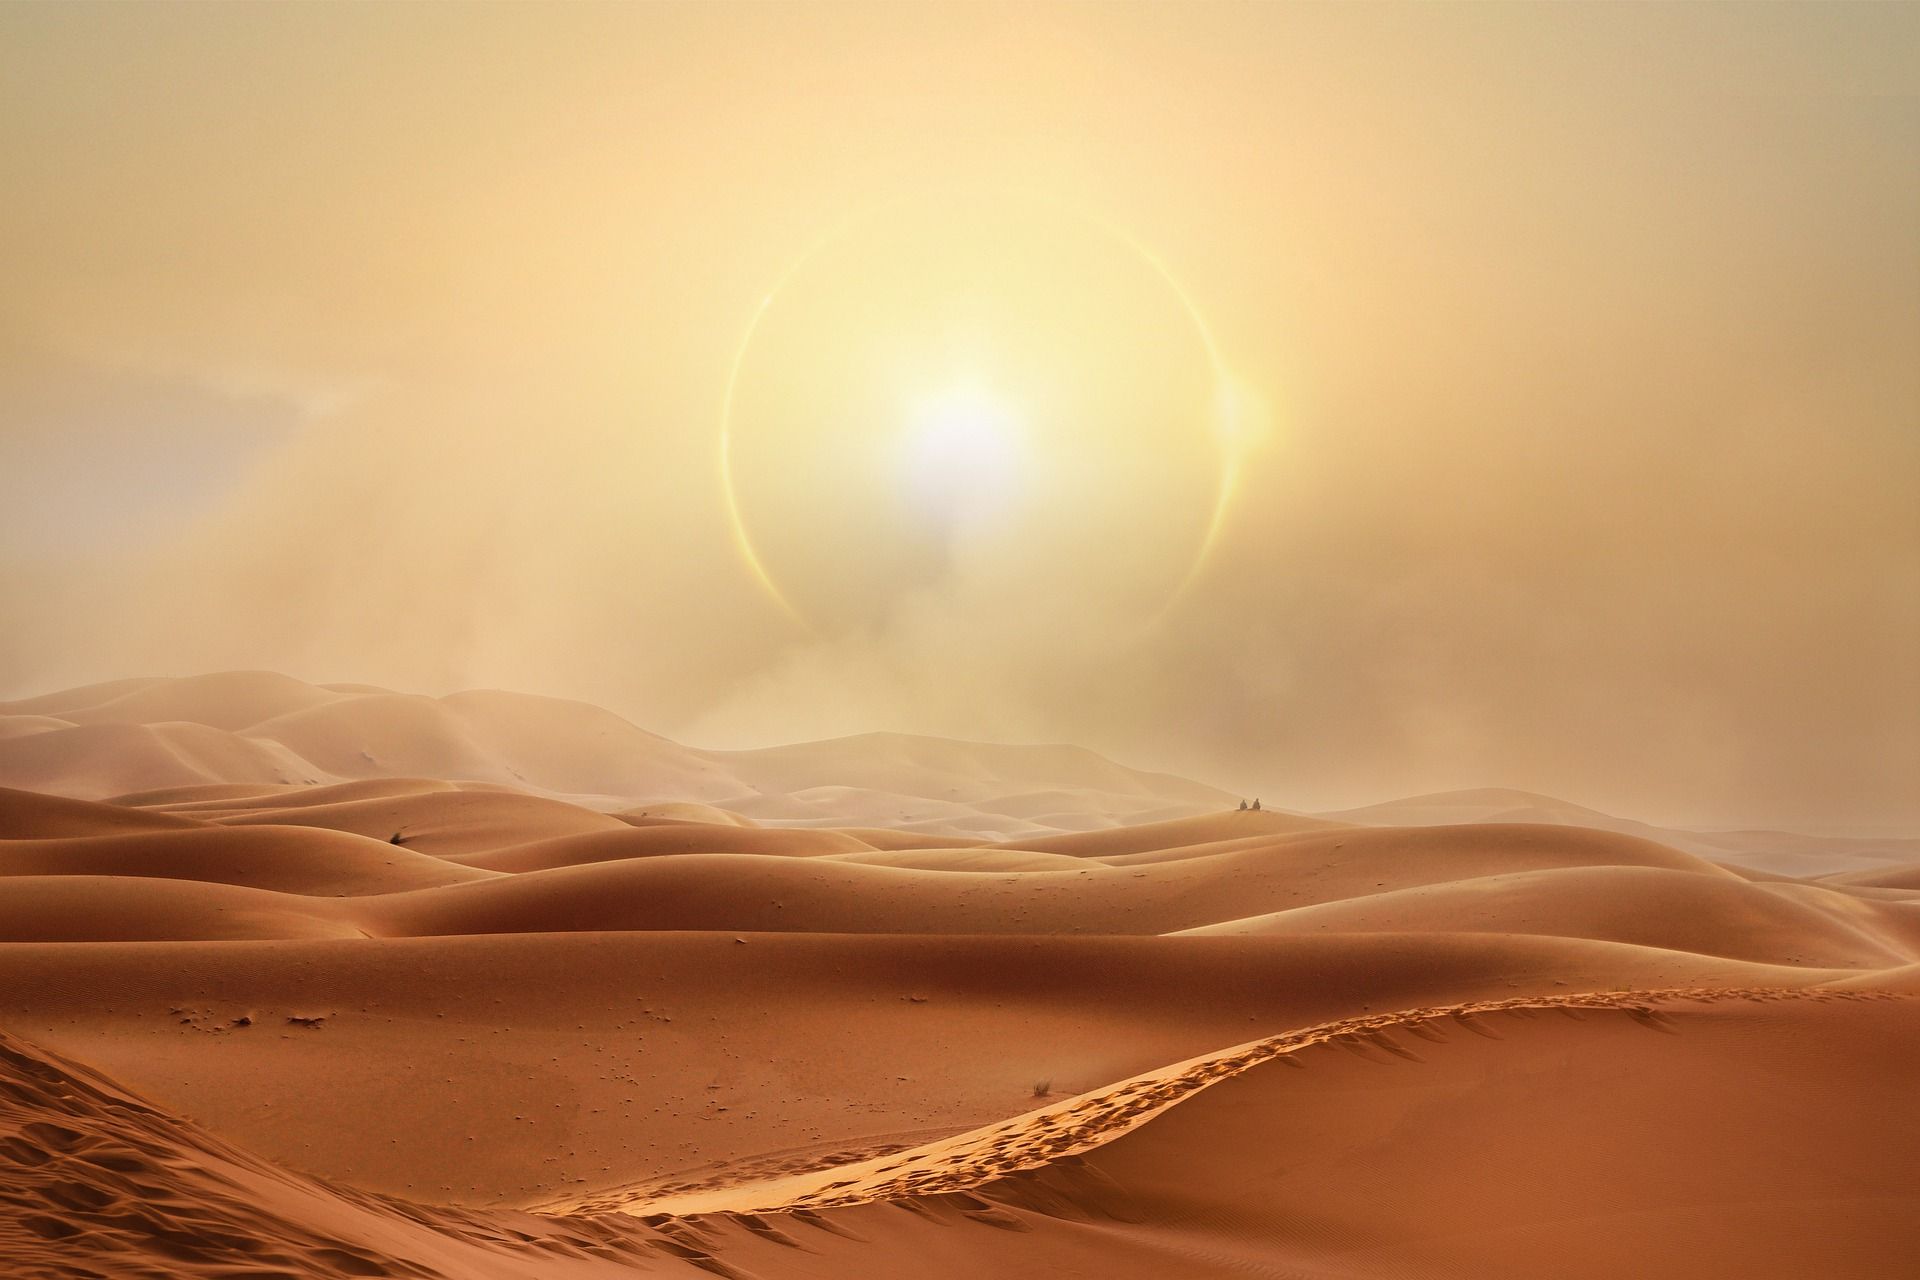 adai pasir melanda gurun dengan angin kencang dan awan debu yang tebal.